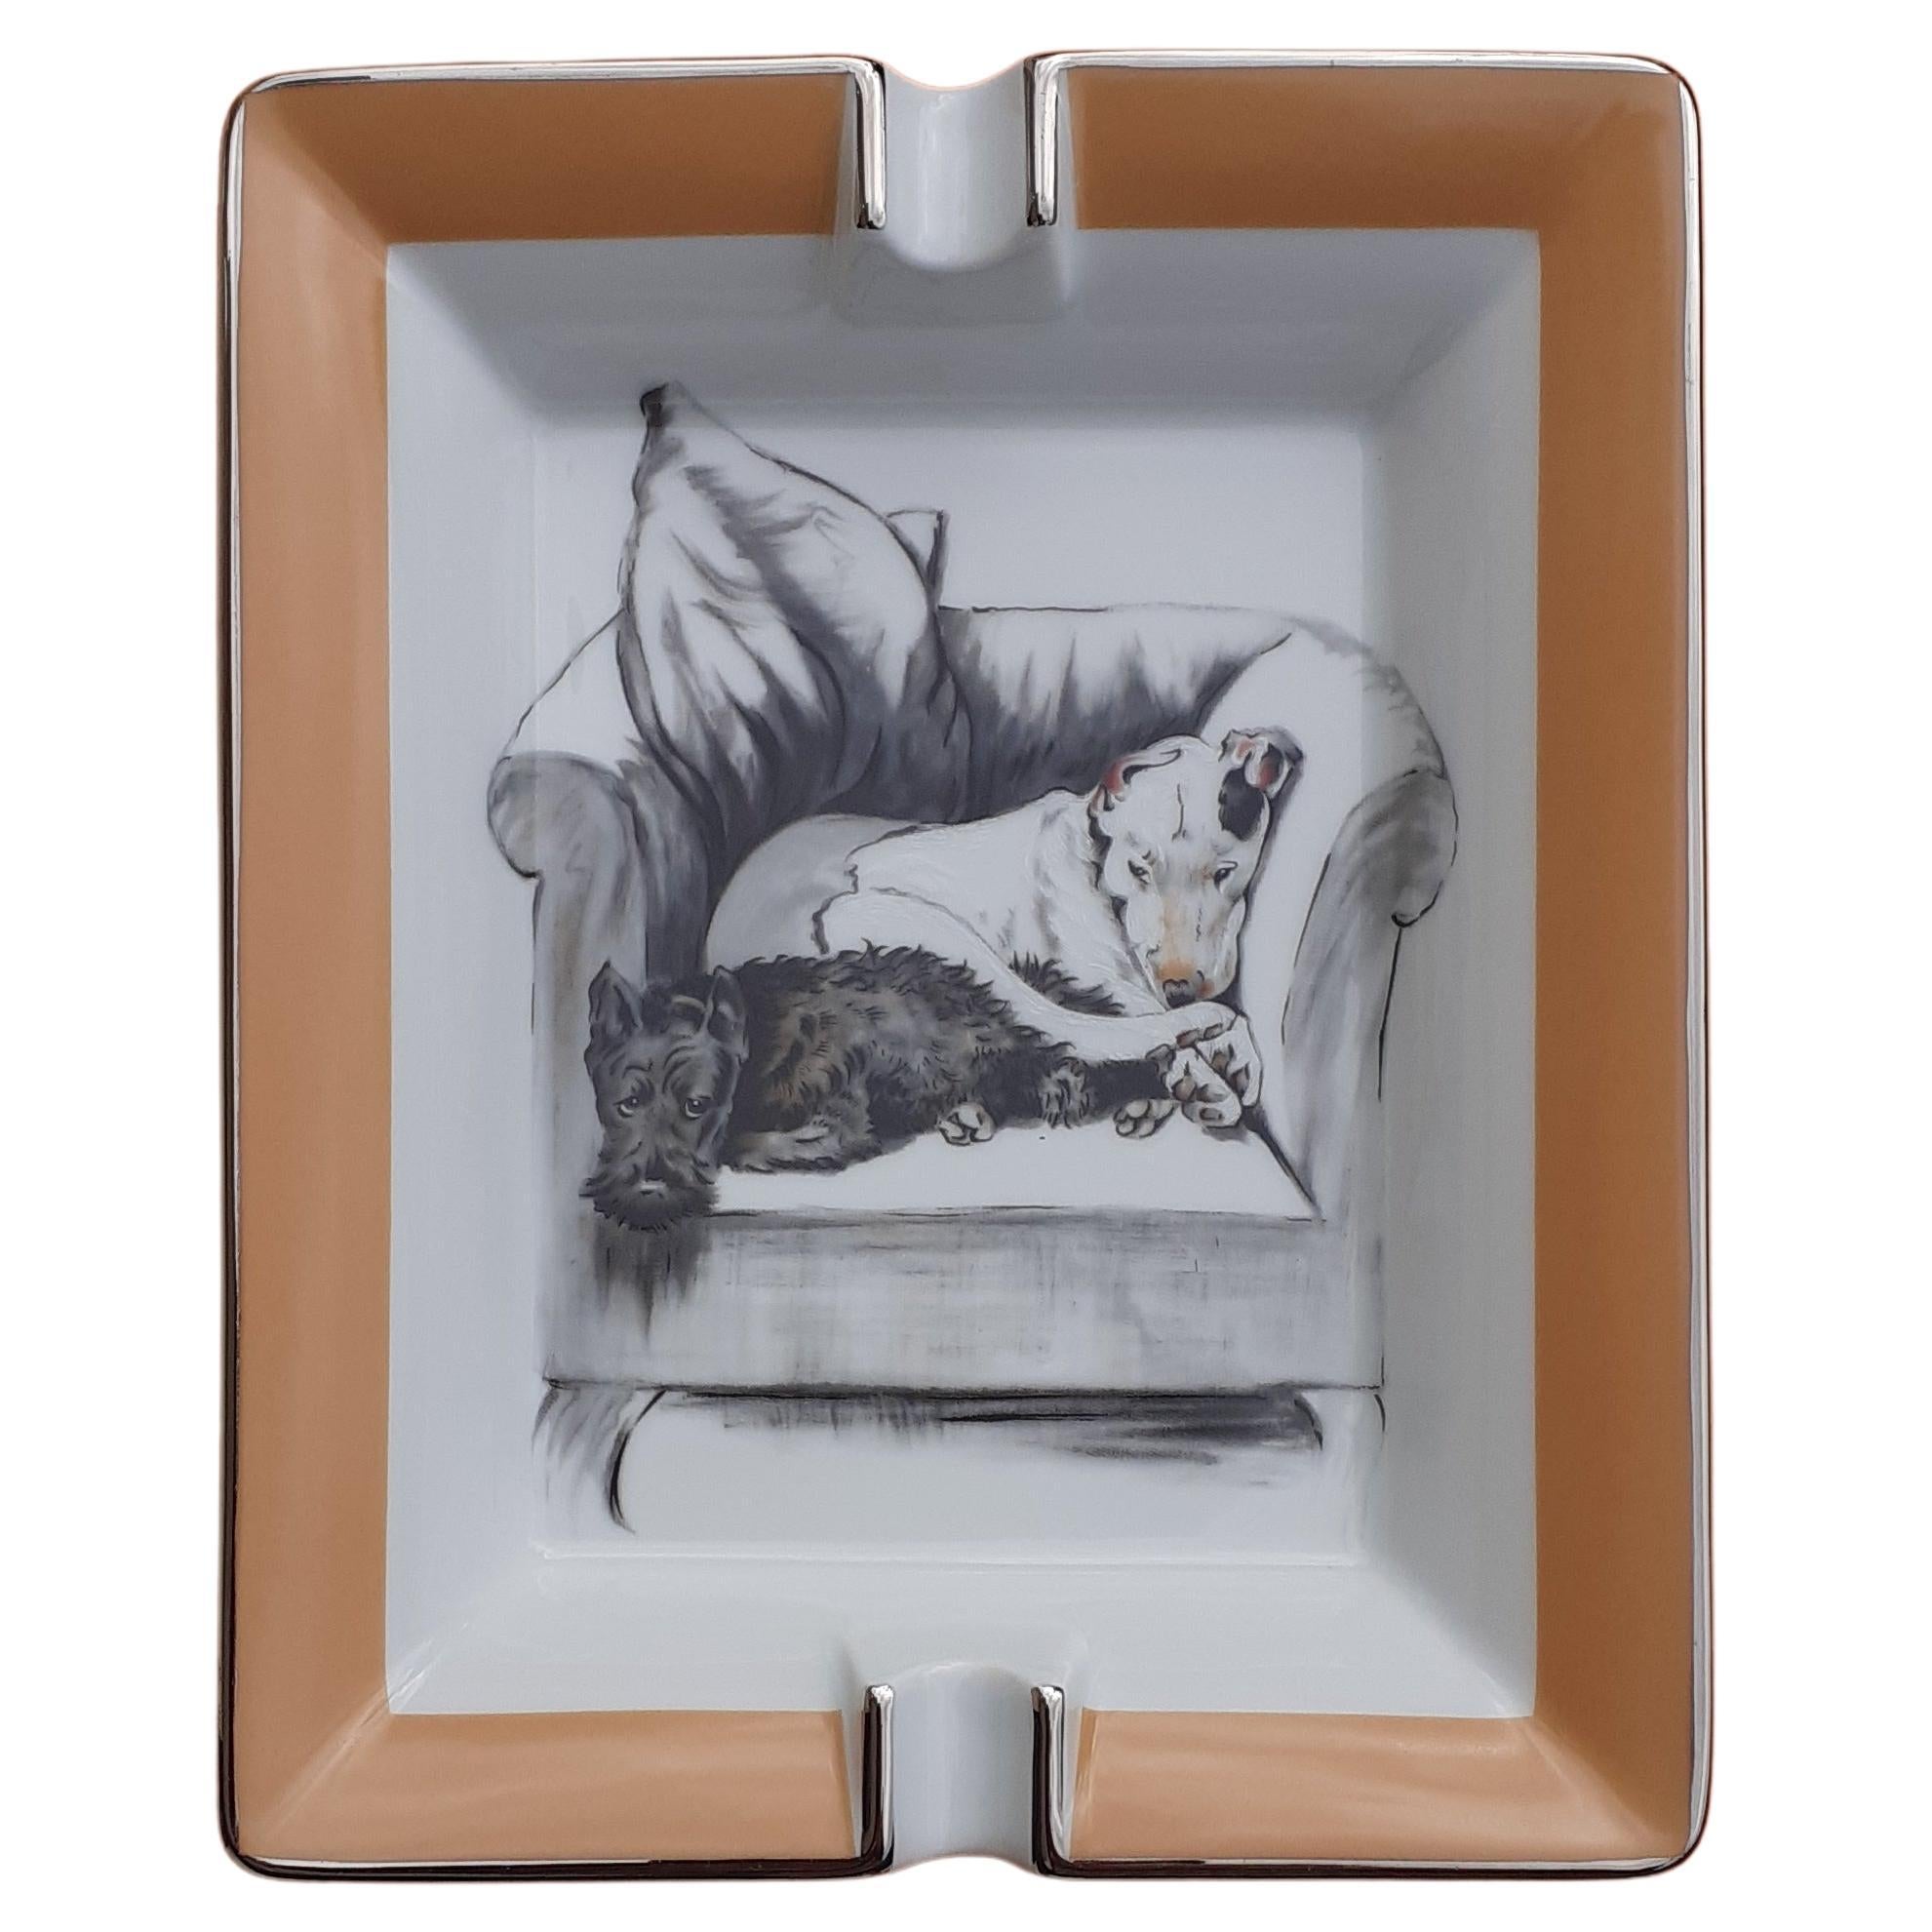 Hermès Cigar Ashtray Change Tray 2 Dogs by Cecil Aldin in Porcelain